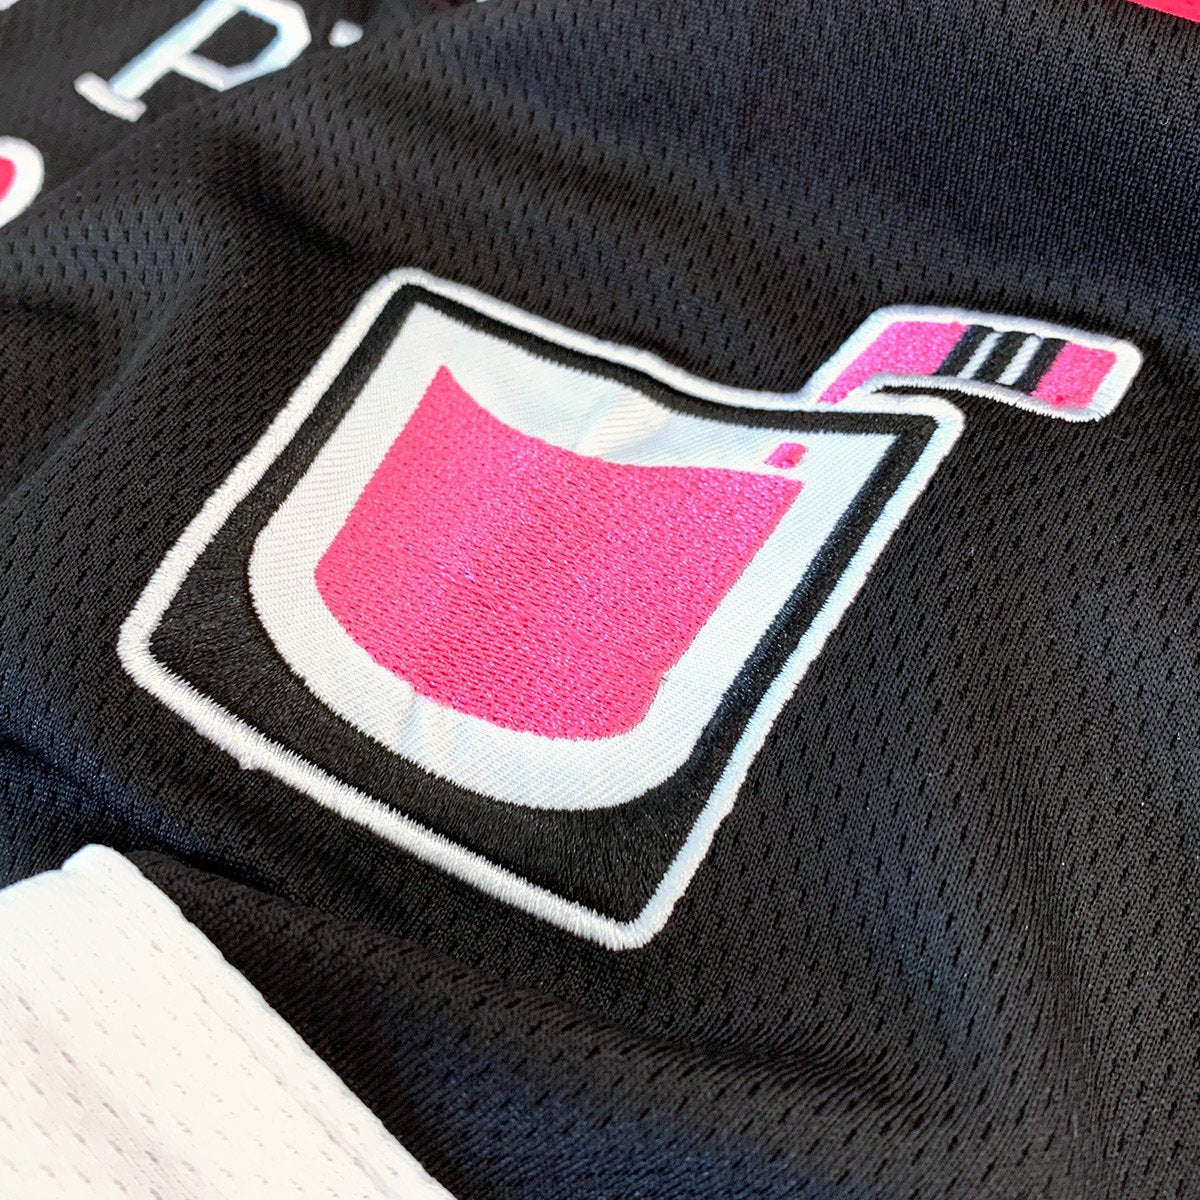 pink whitney hockey jersey｜TikTok Search